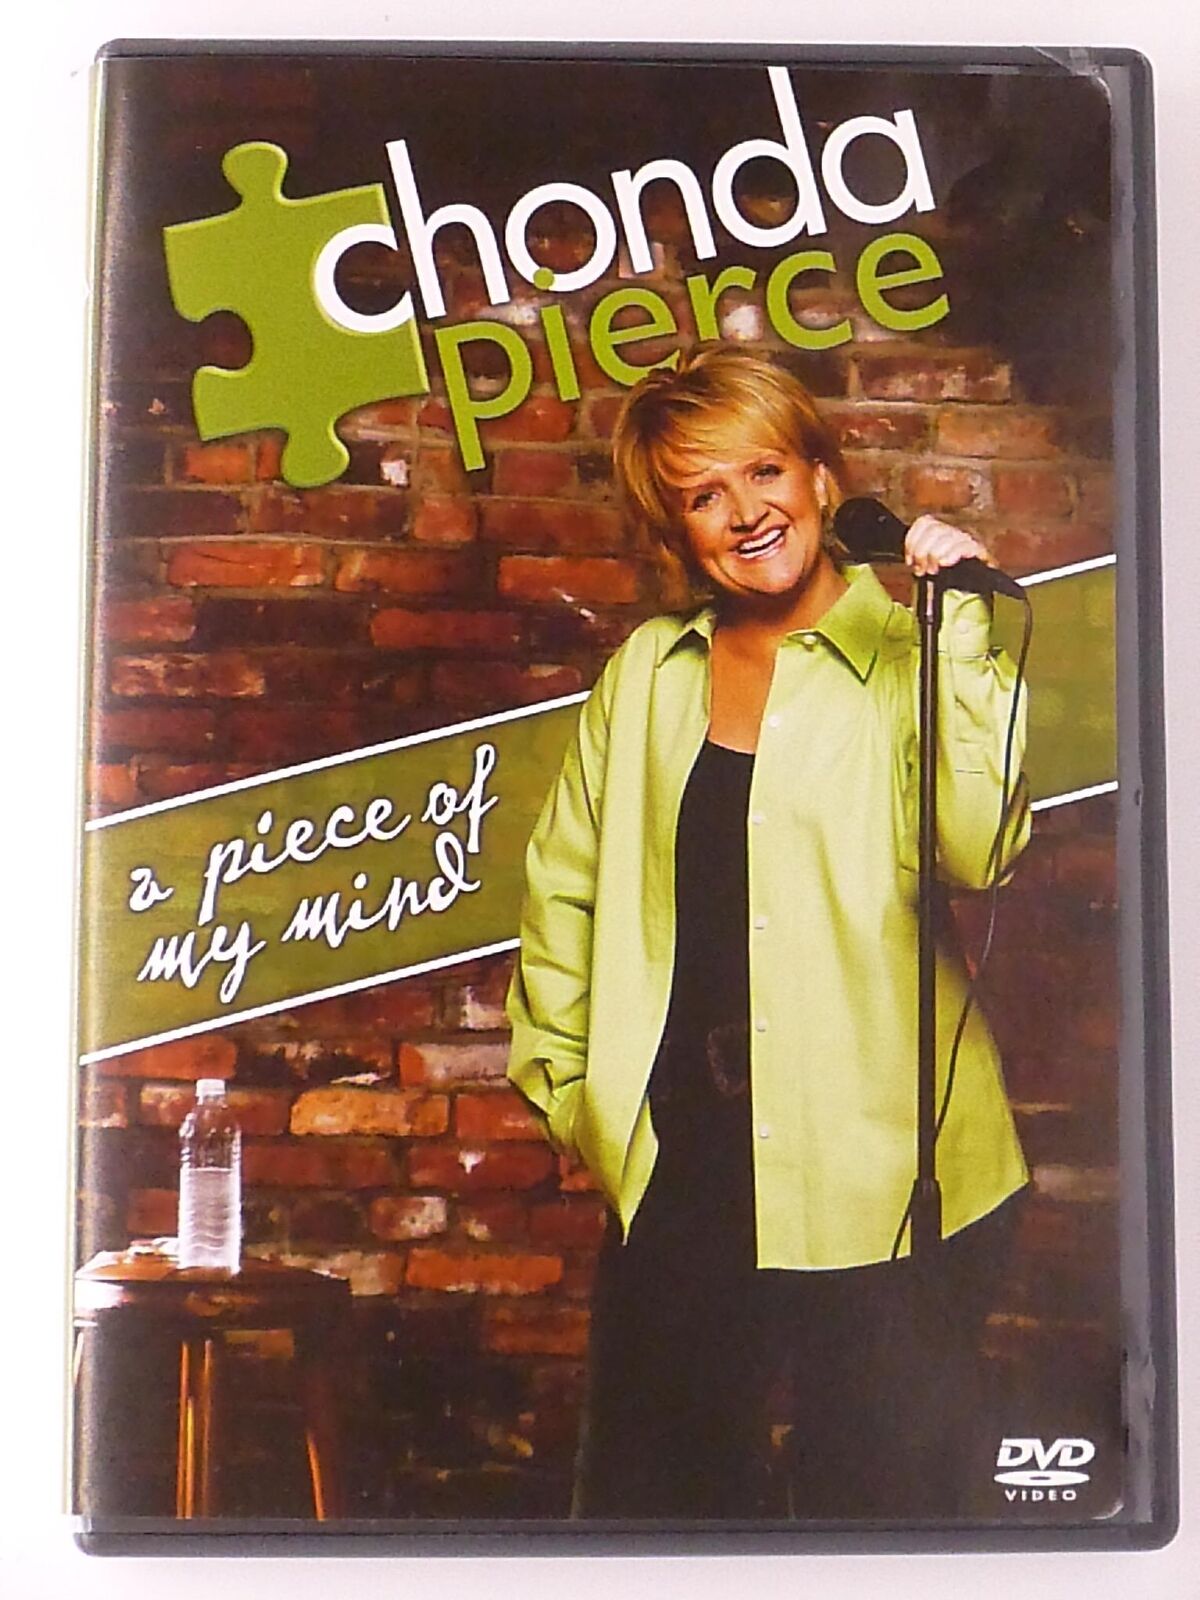 Chonda Pierce - A Piece of my Mind (DVD, 2006) - I0123